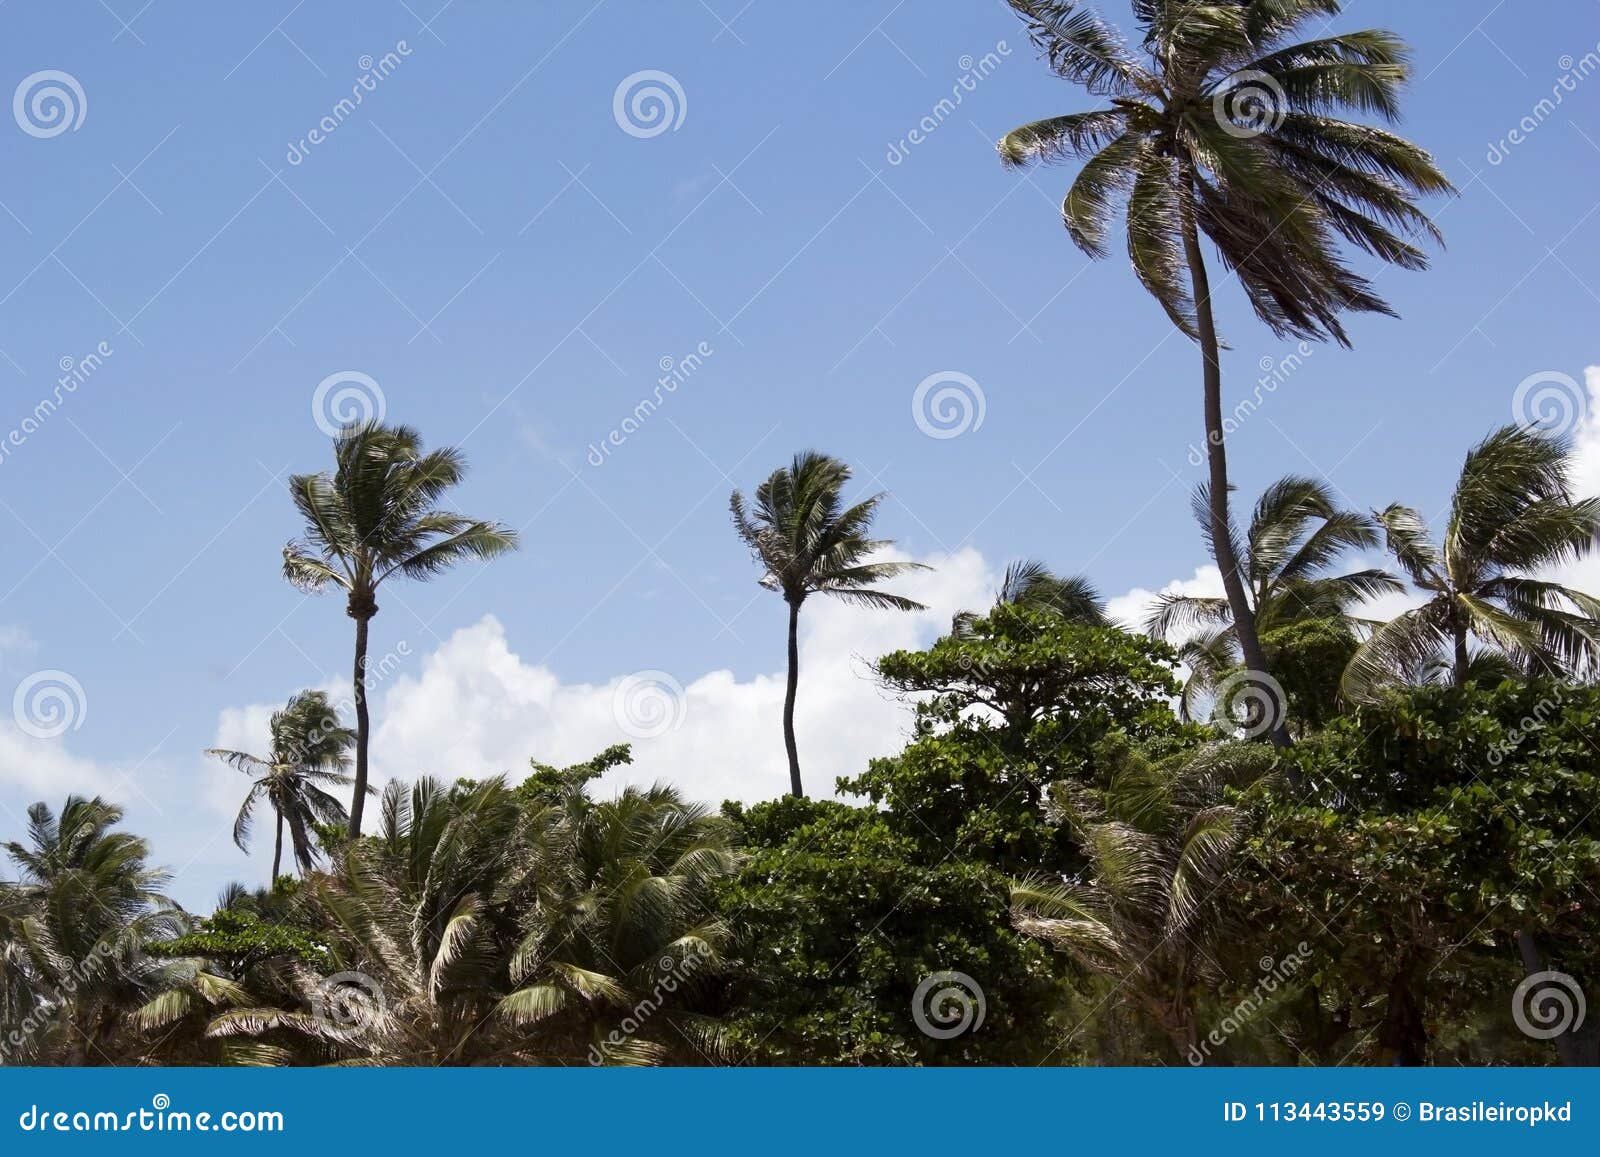 coconut tree cumbuco ceara brazil